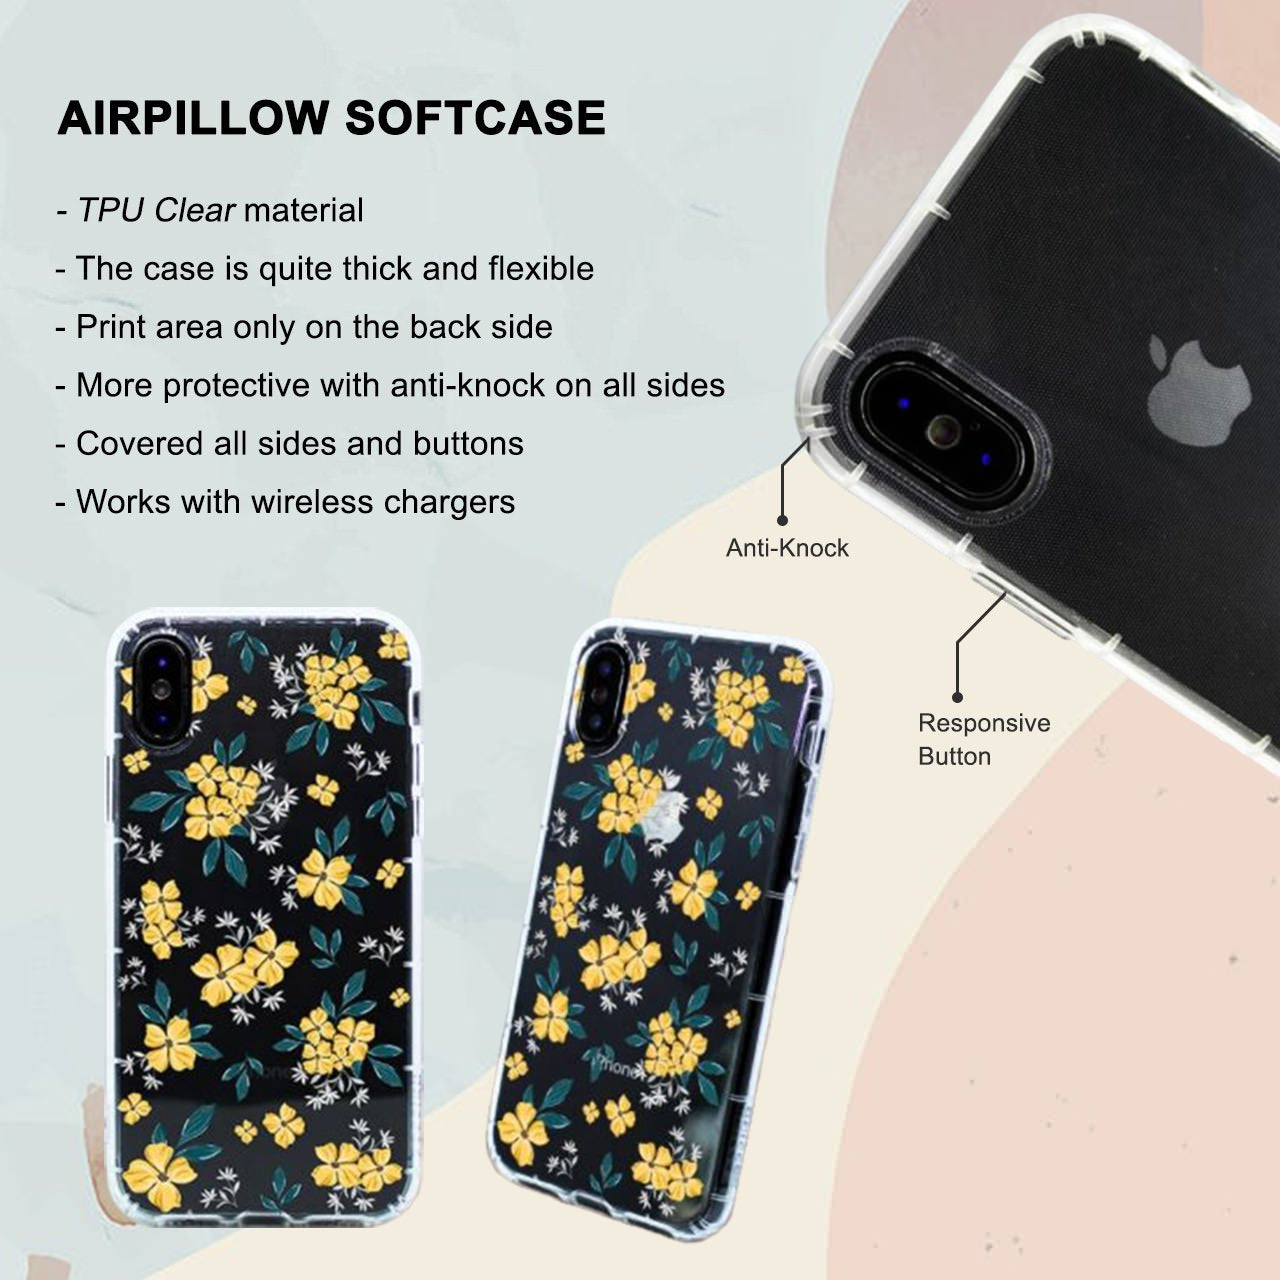 Snowflake iPhone 6 / 6s Plus Case